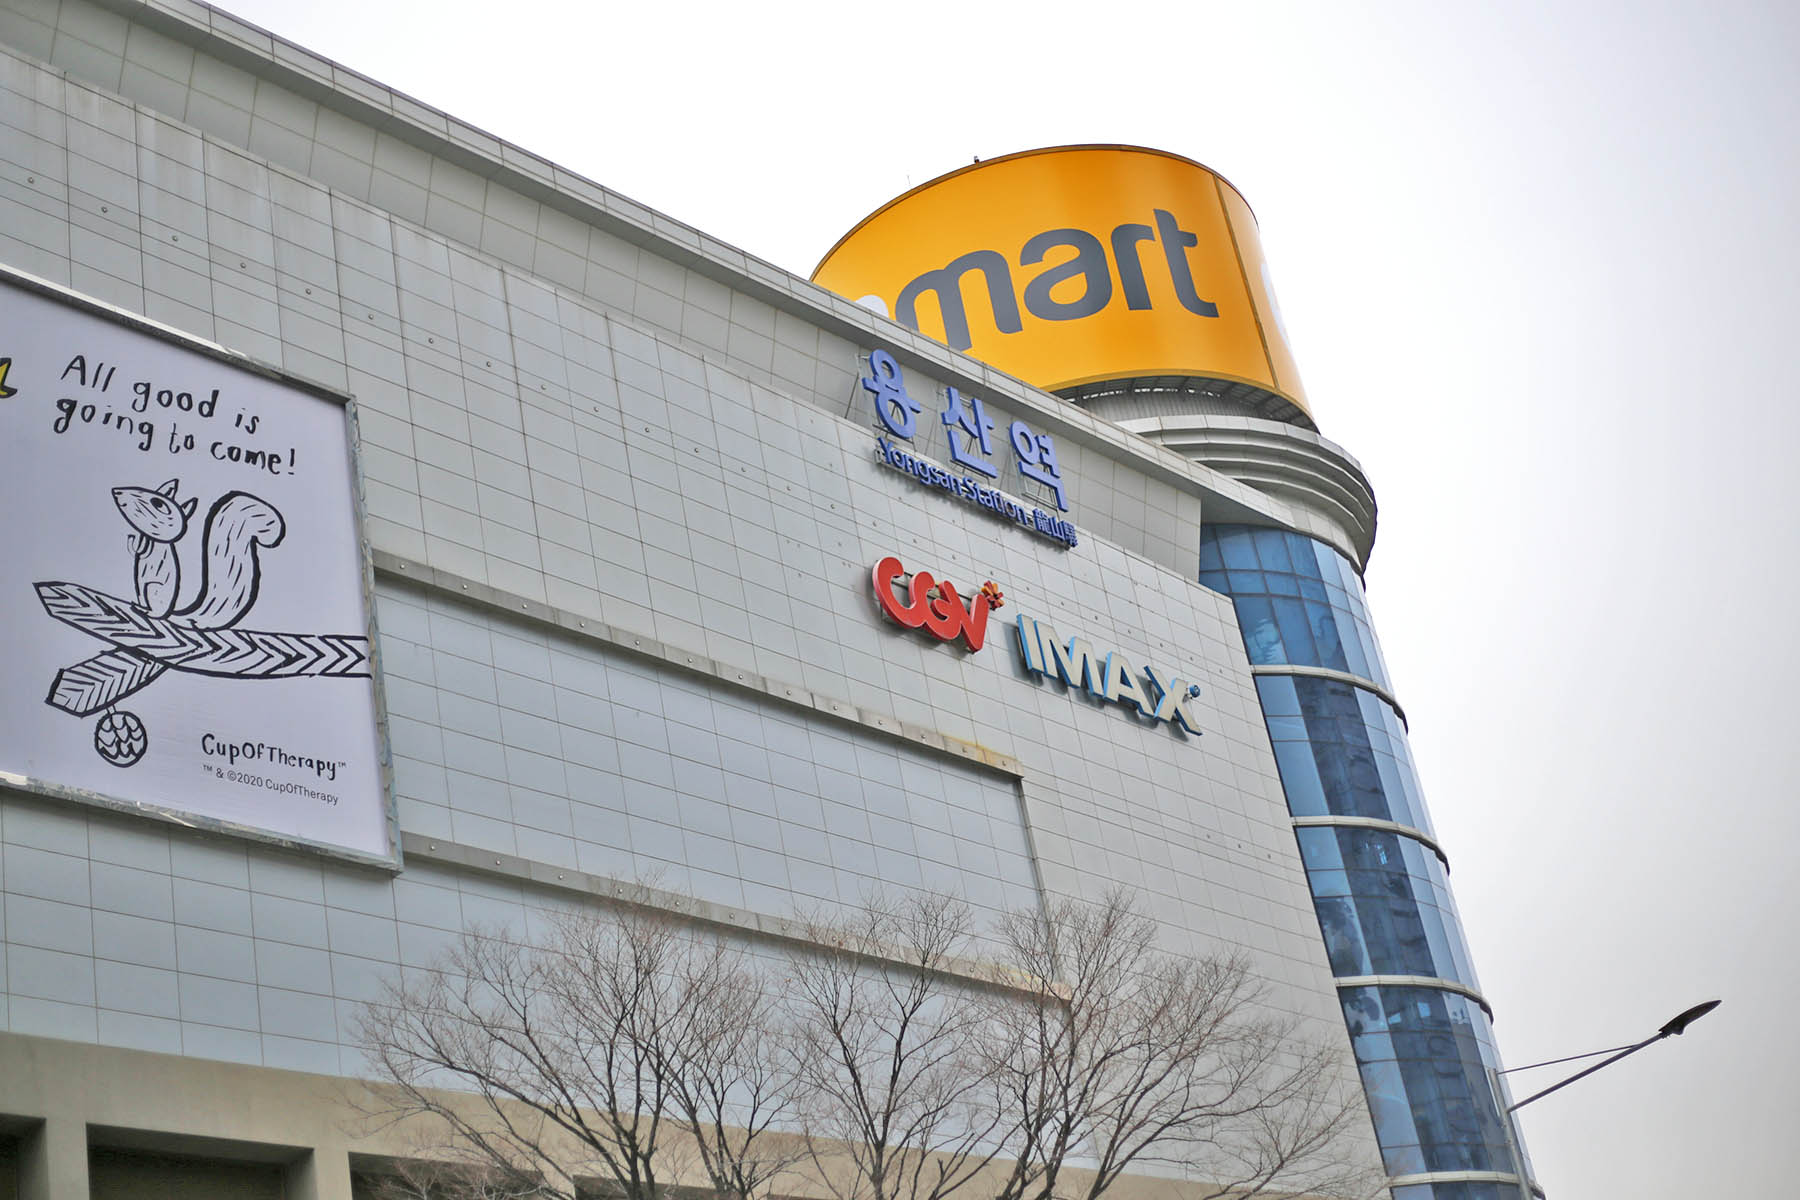 Best Place For Grocery Shopping In Yongsan, Seoul #EMART#YONGSAN